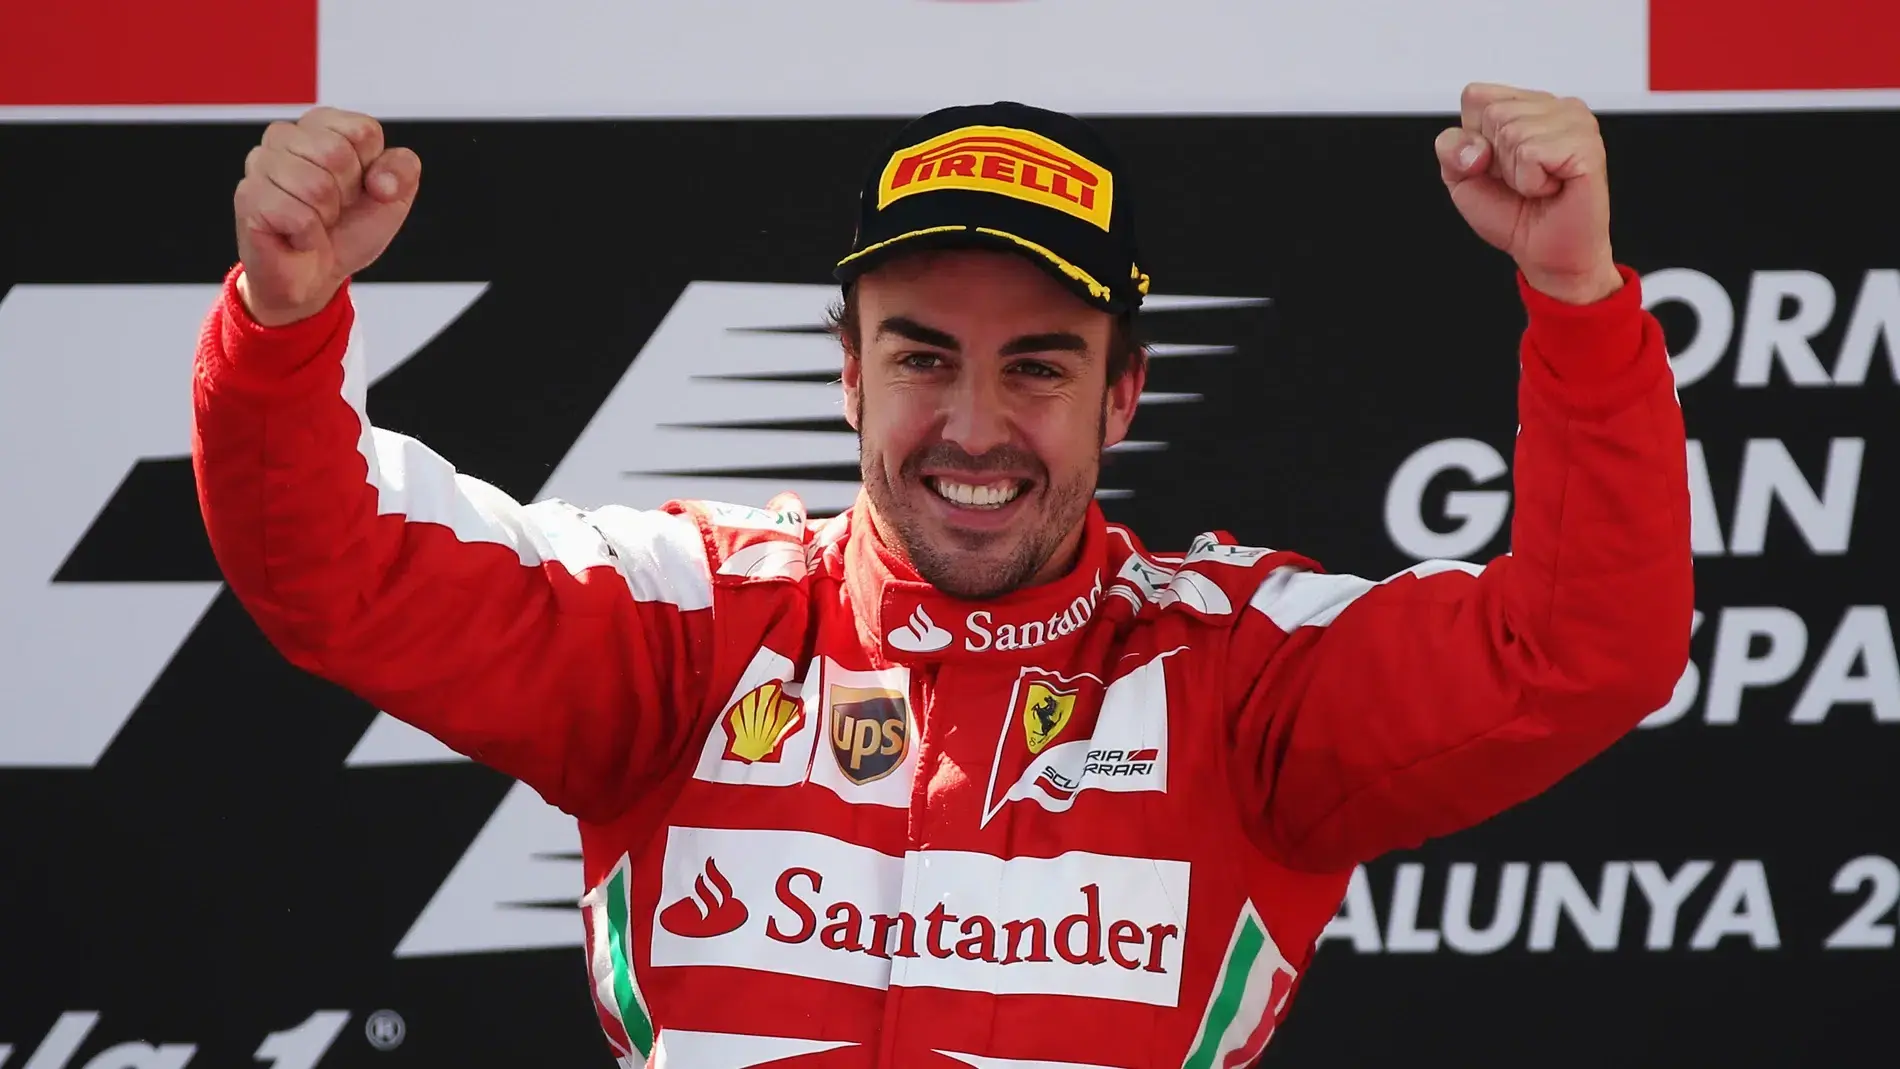 Fernando Alonso admits his open account at Ferrari
	

